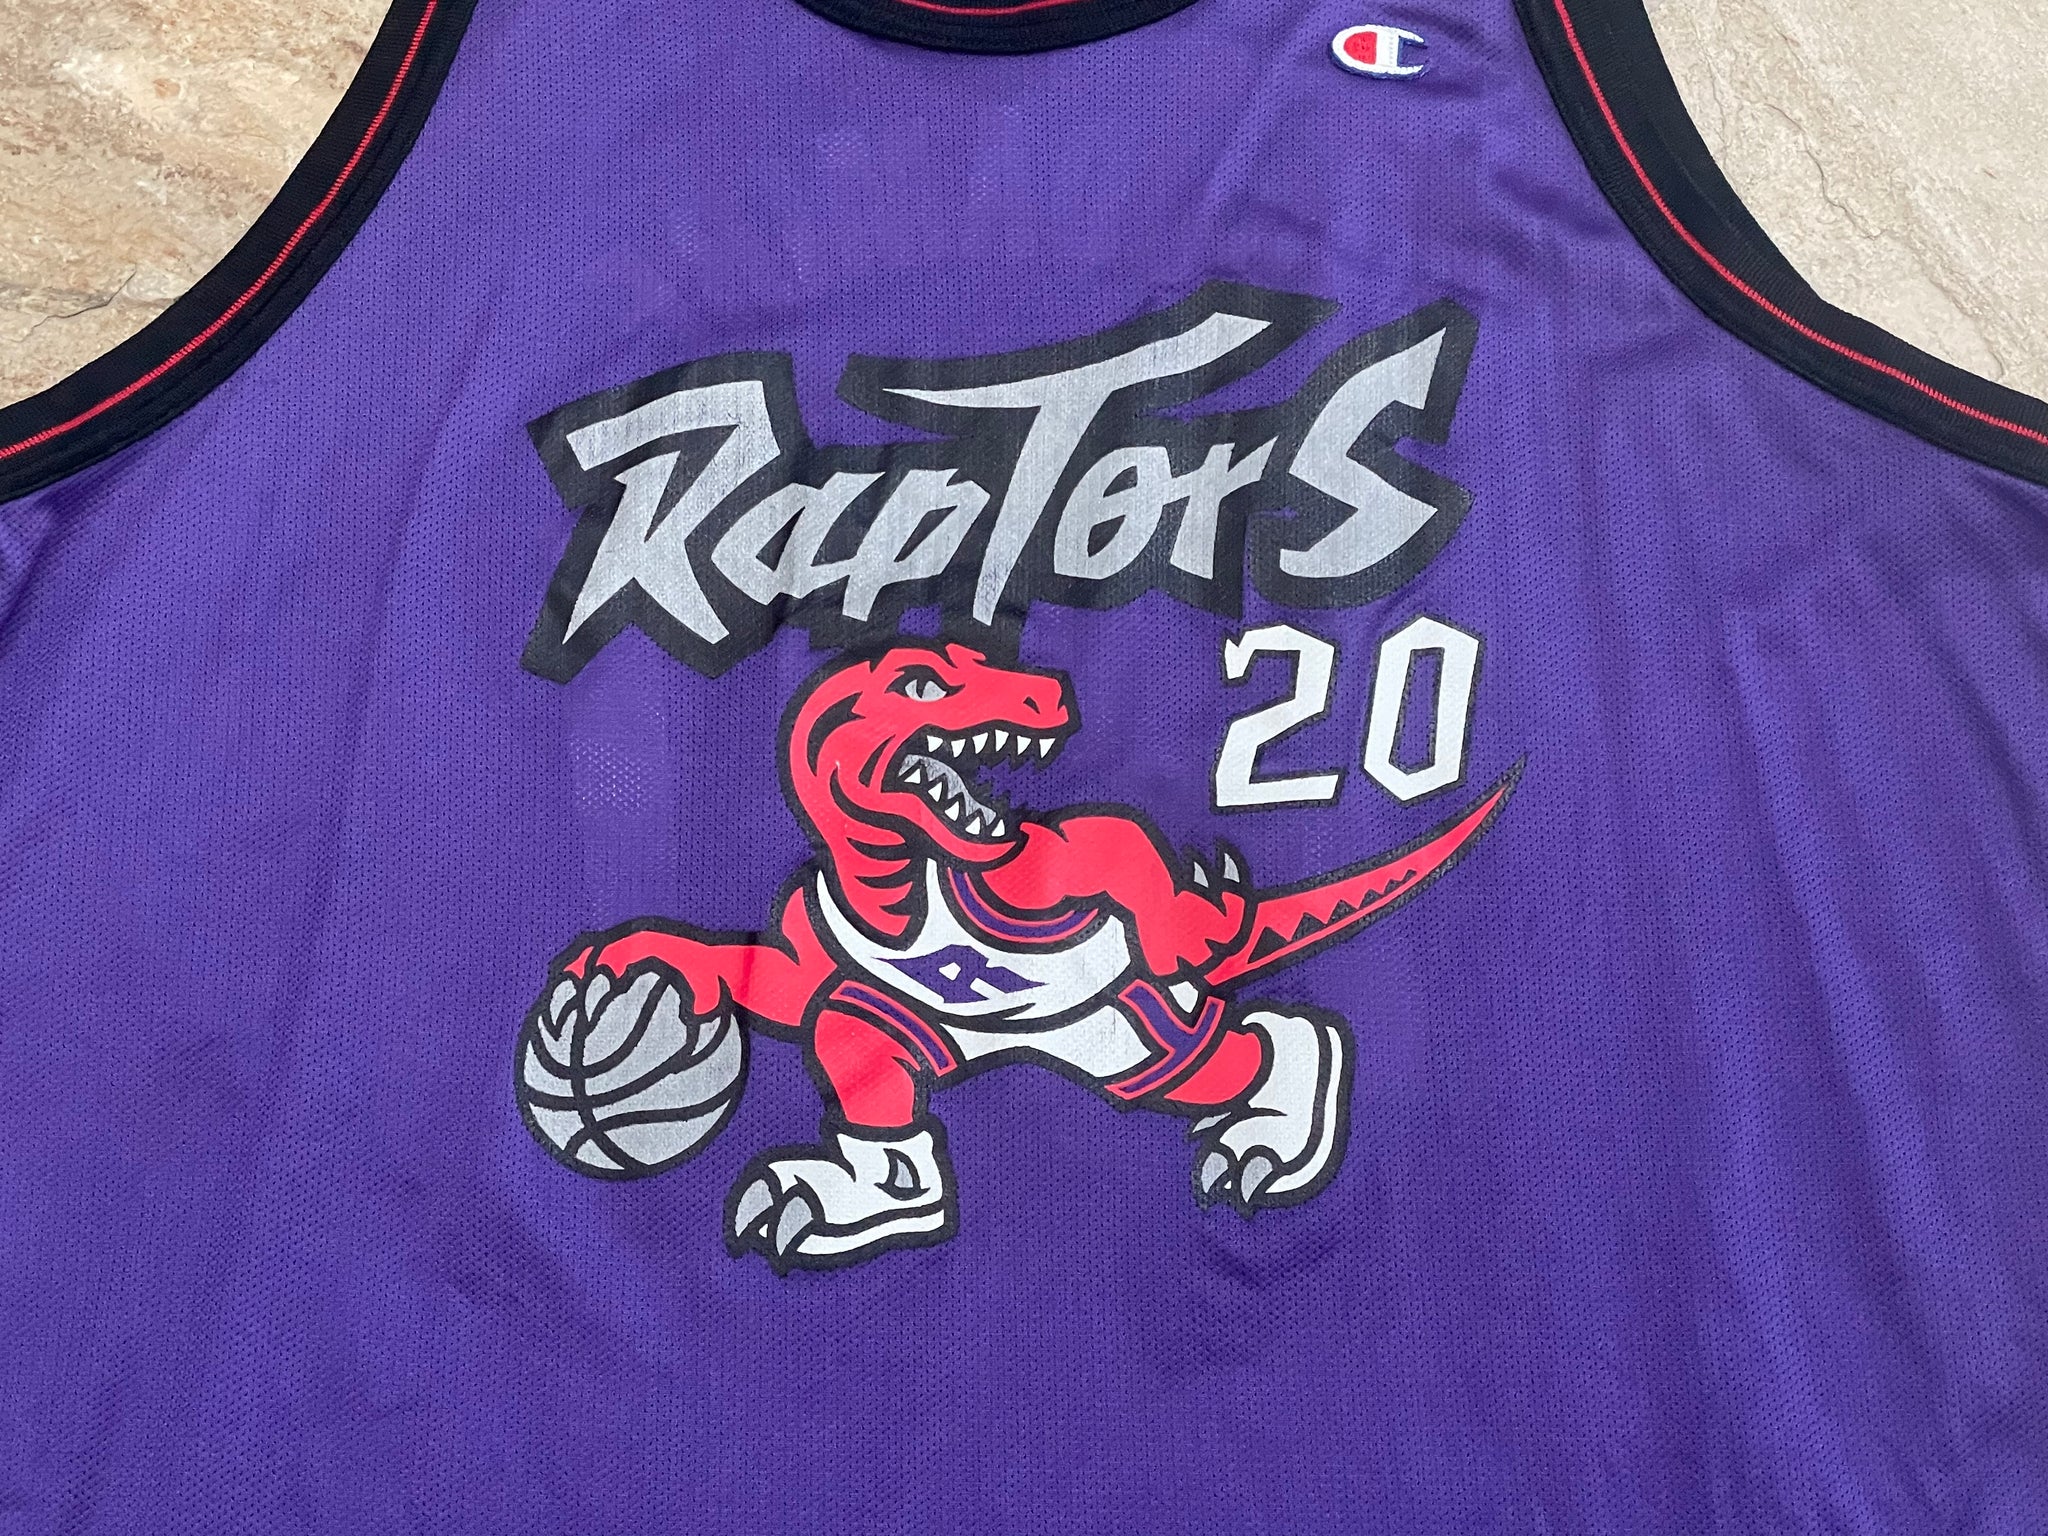 Vintage 90s Toronto Raptors Starter Basketball Jersey Size XL